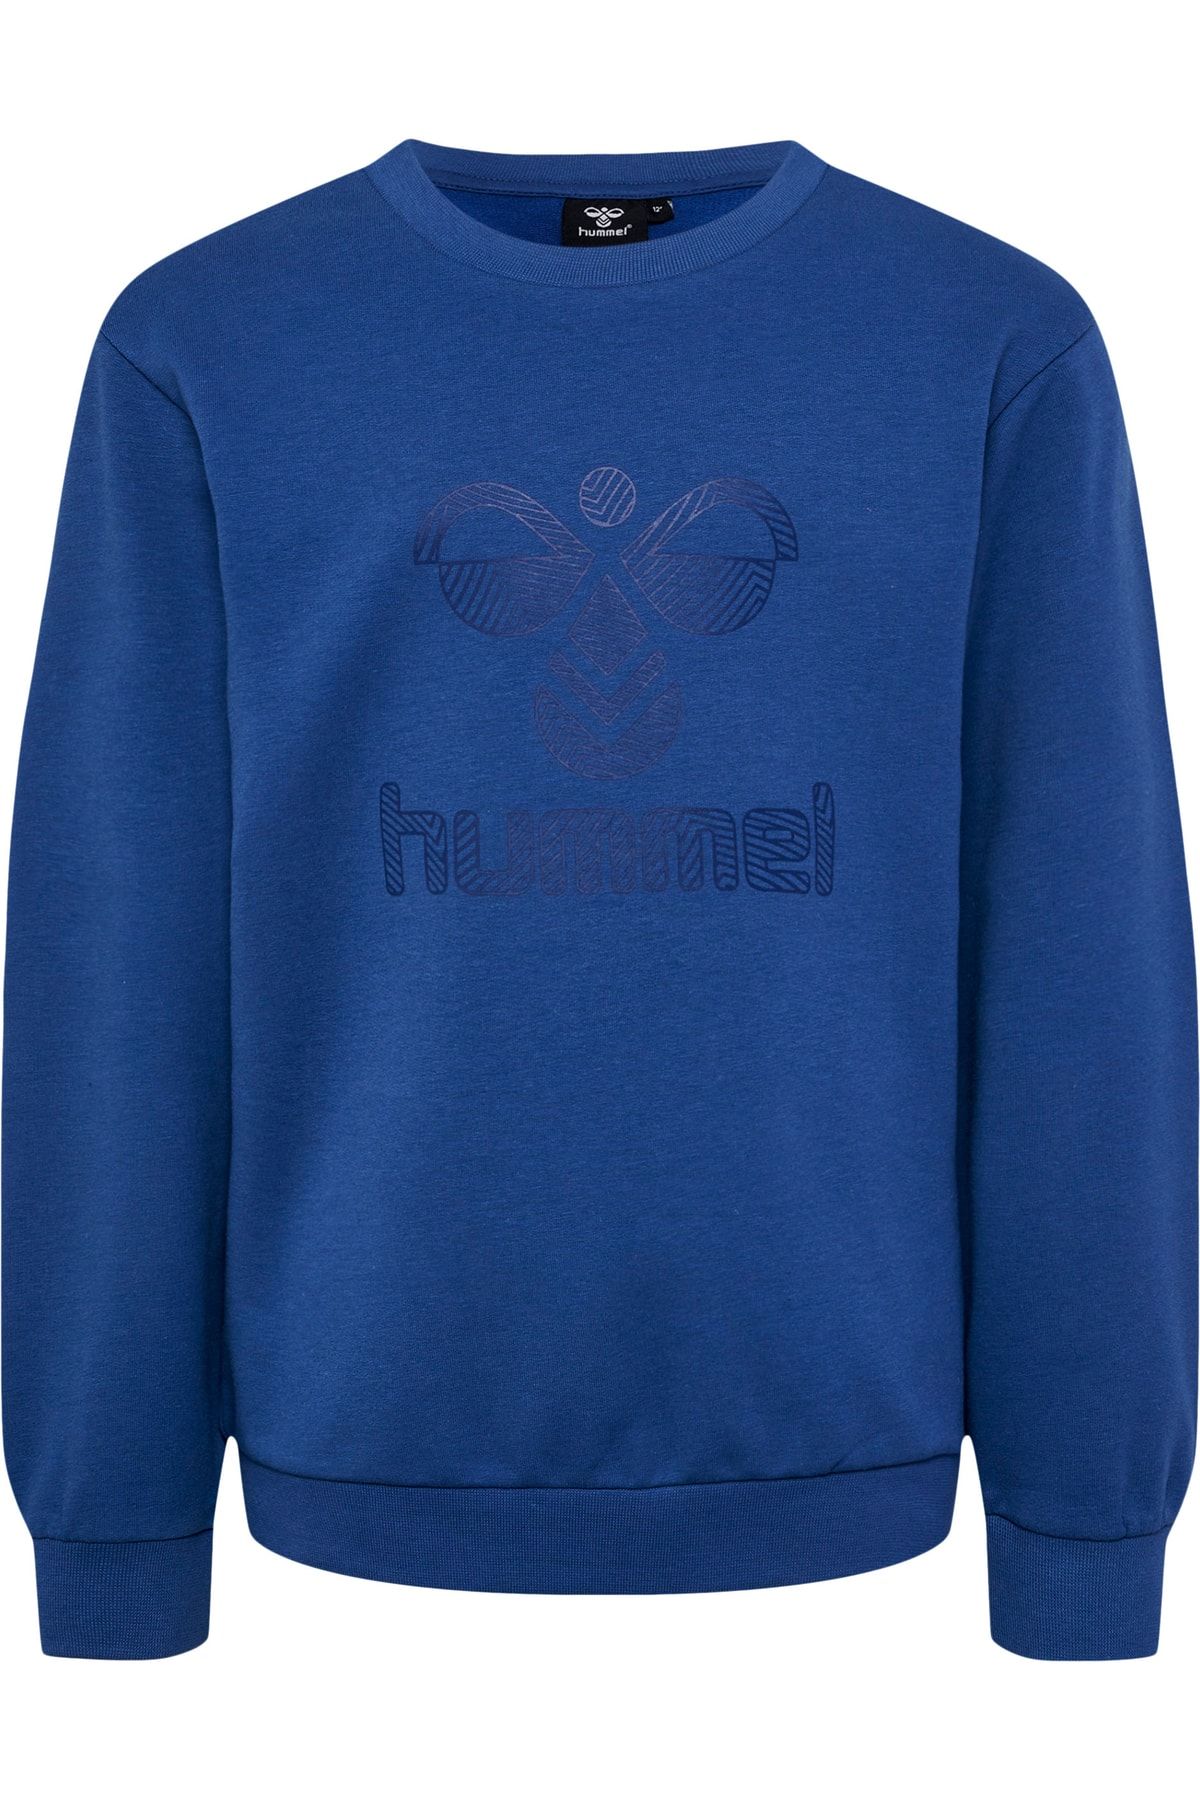 Regular HUMMEL Fit - - Trendyol - Sweatshirt Blau